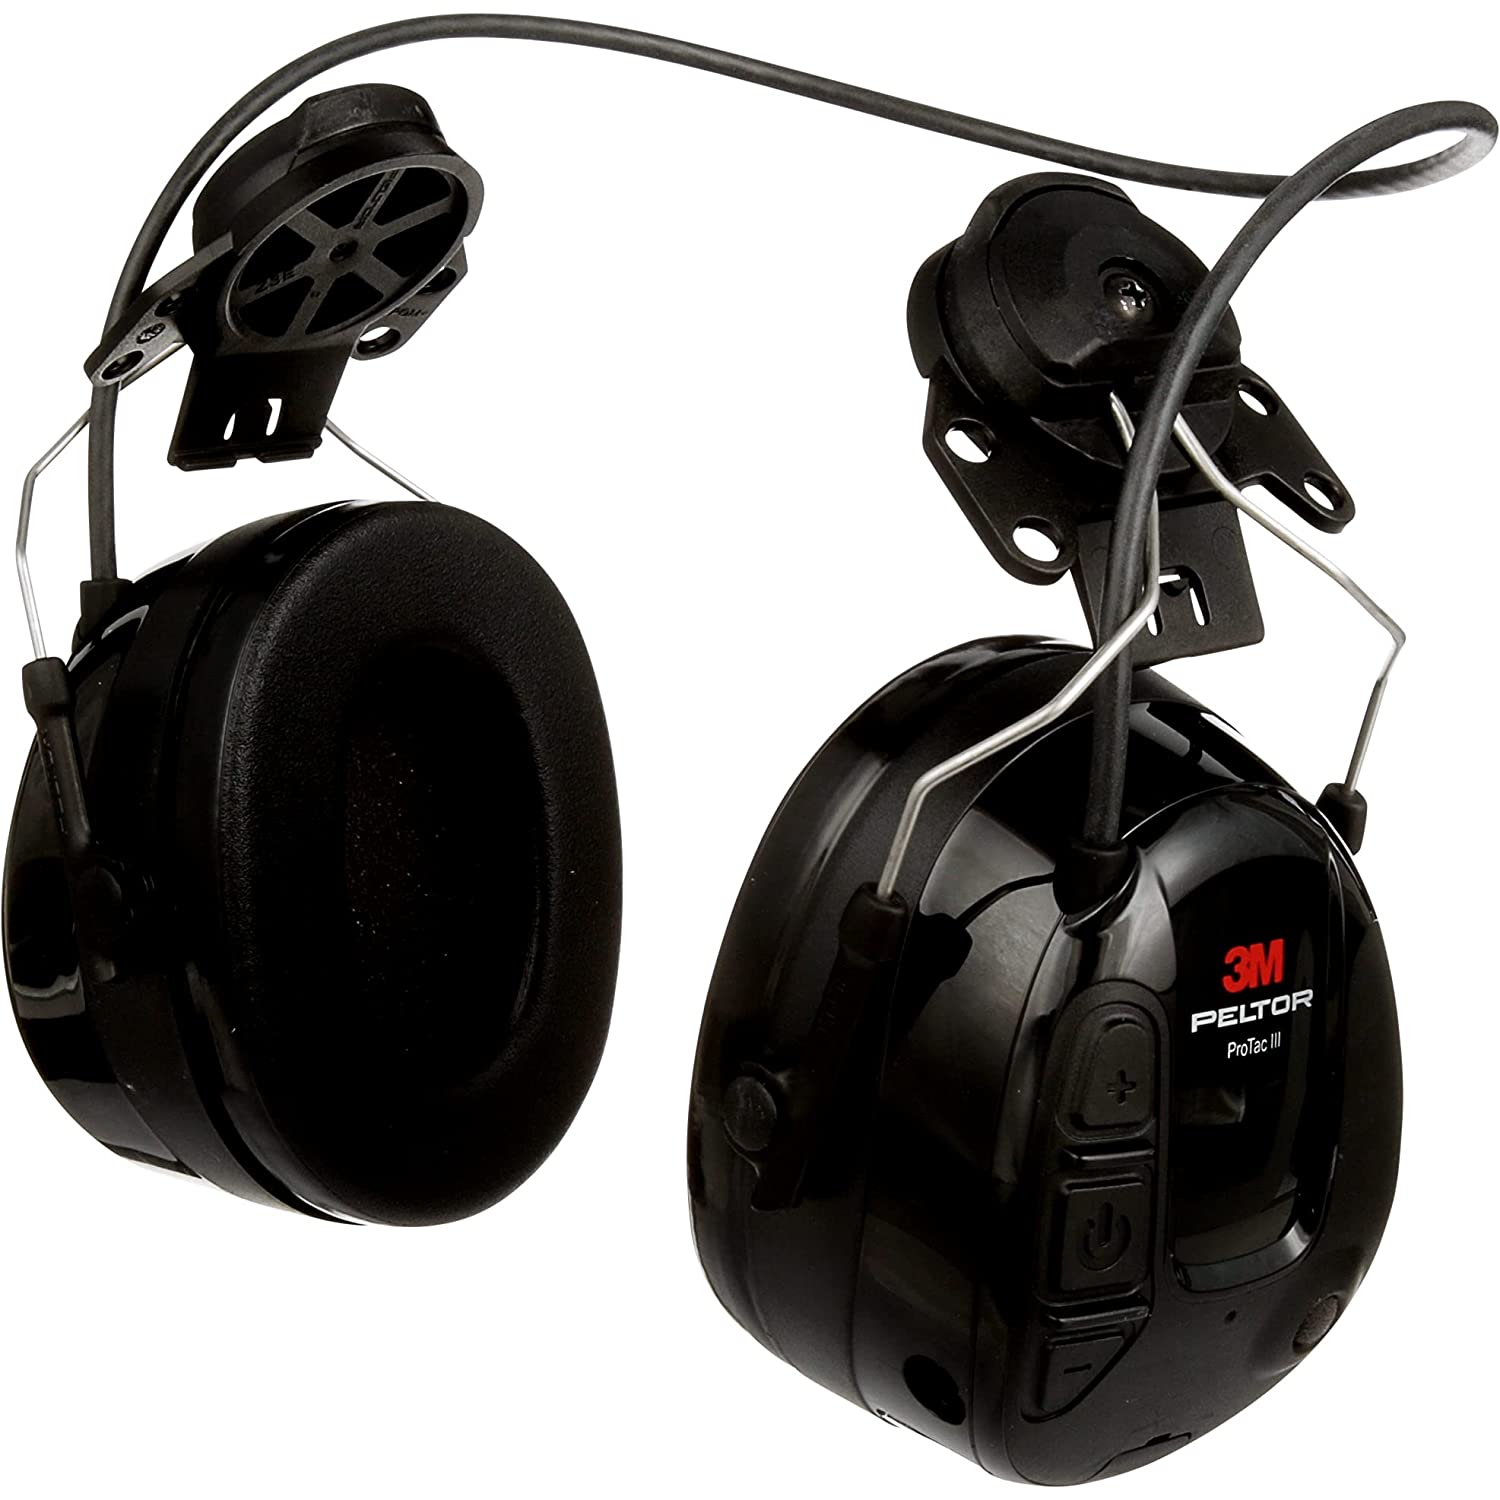 Cache-oreilles - Casque 3M PELTOR™ ProTac III, noir, casque fixé